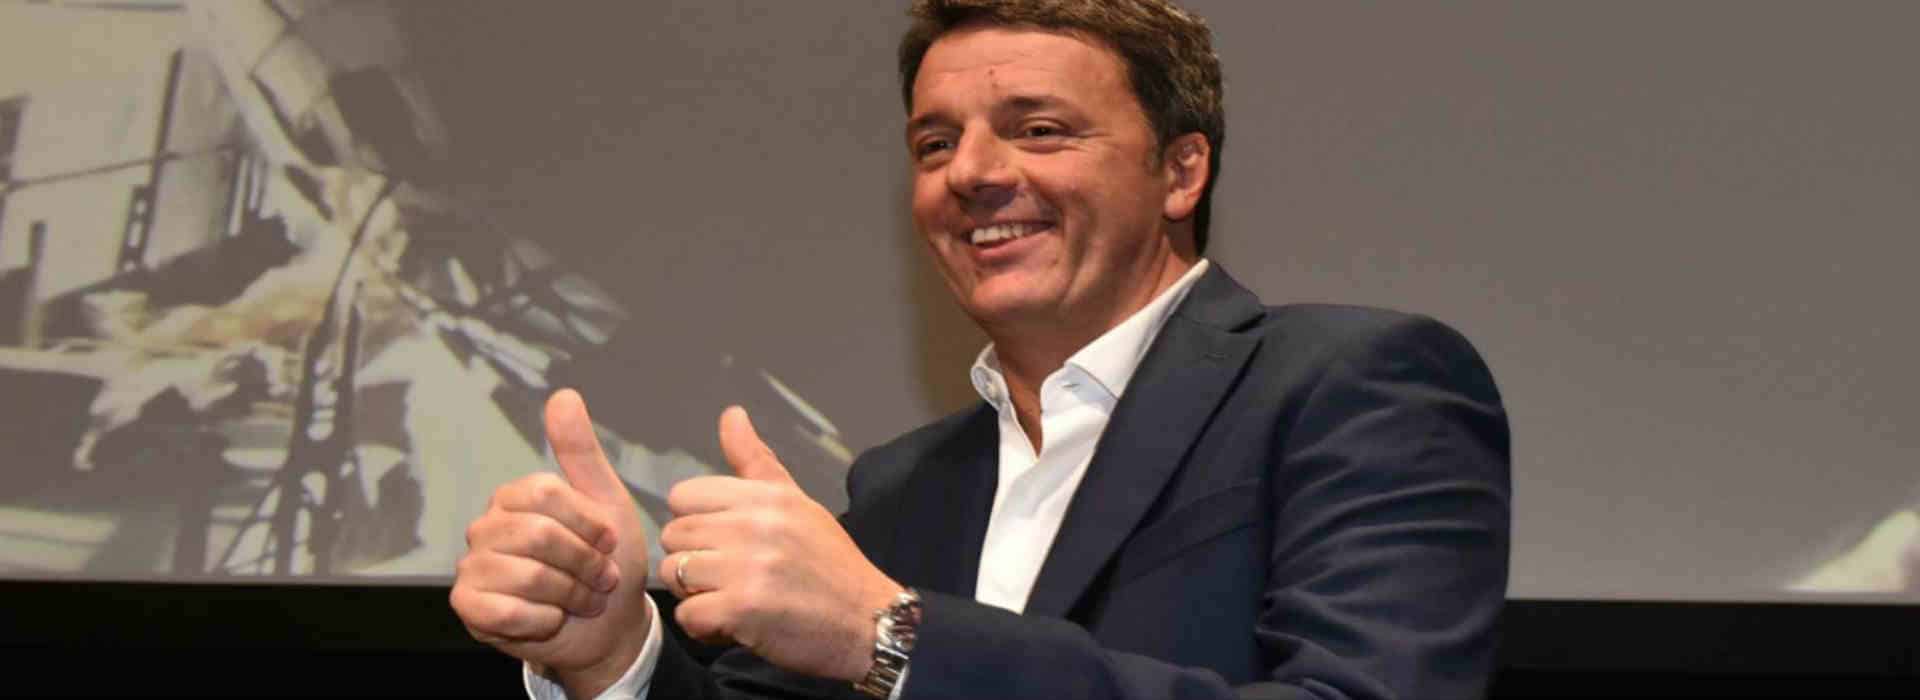 Matteo Renzi sorridente con i pollici alzati